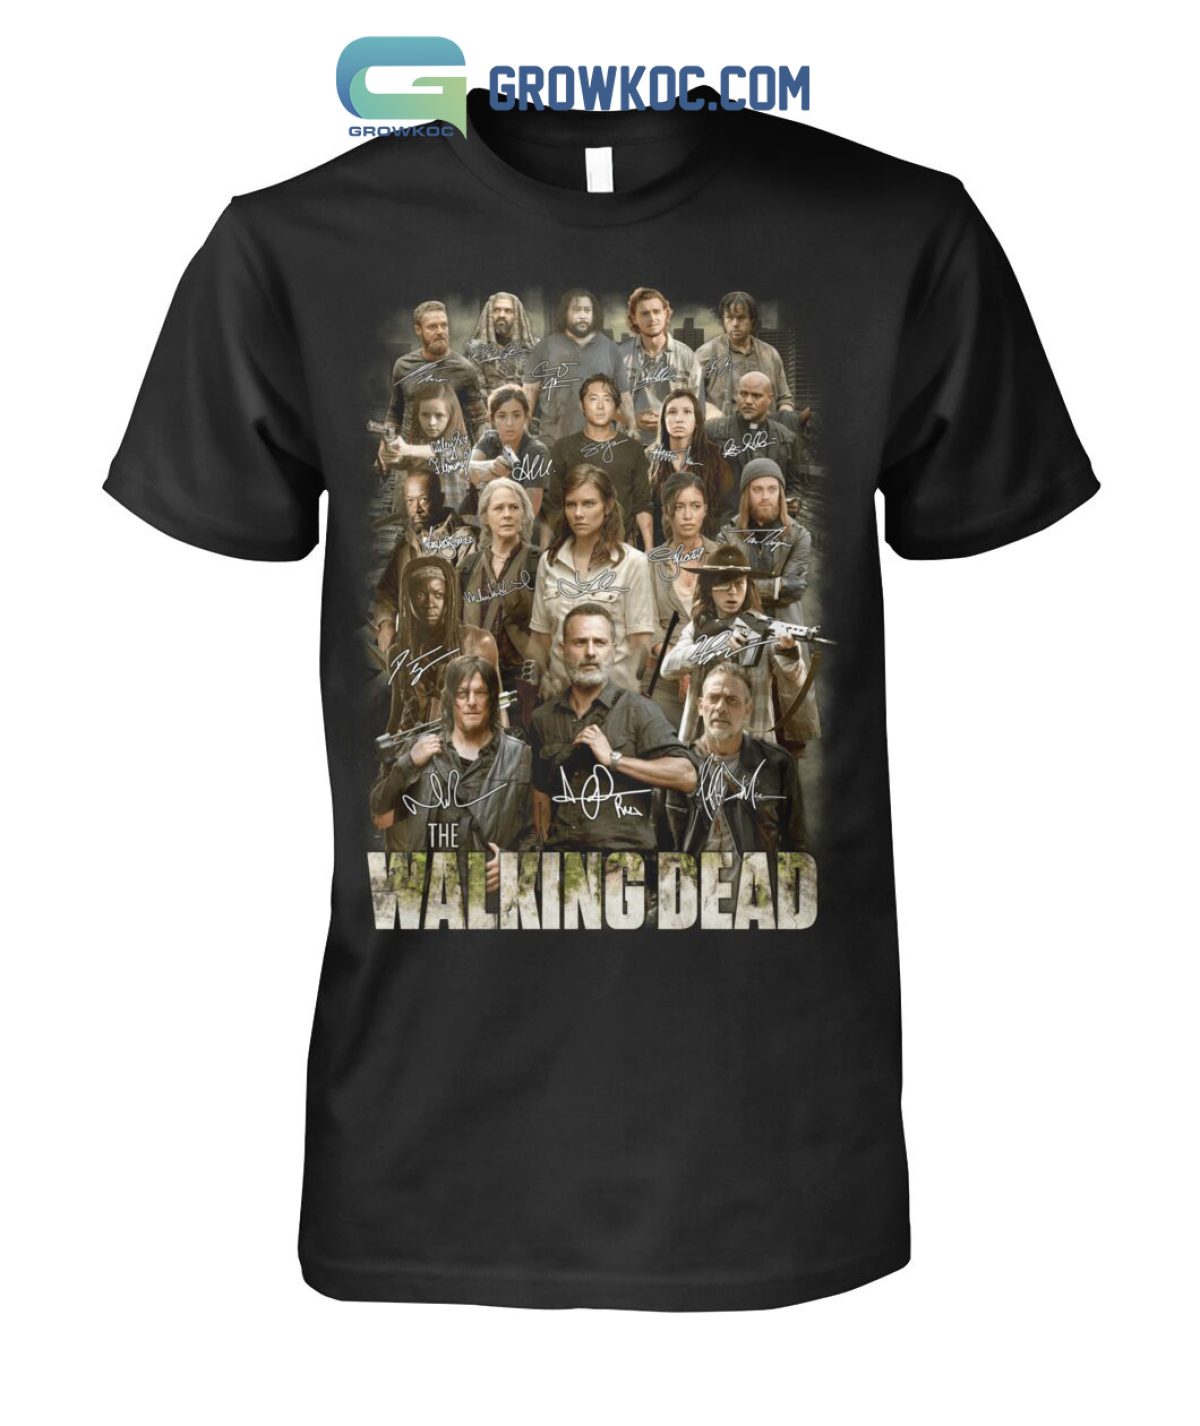 The Walking Dead shirt